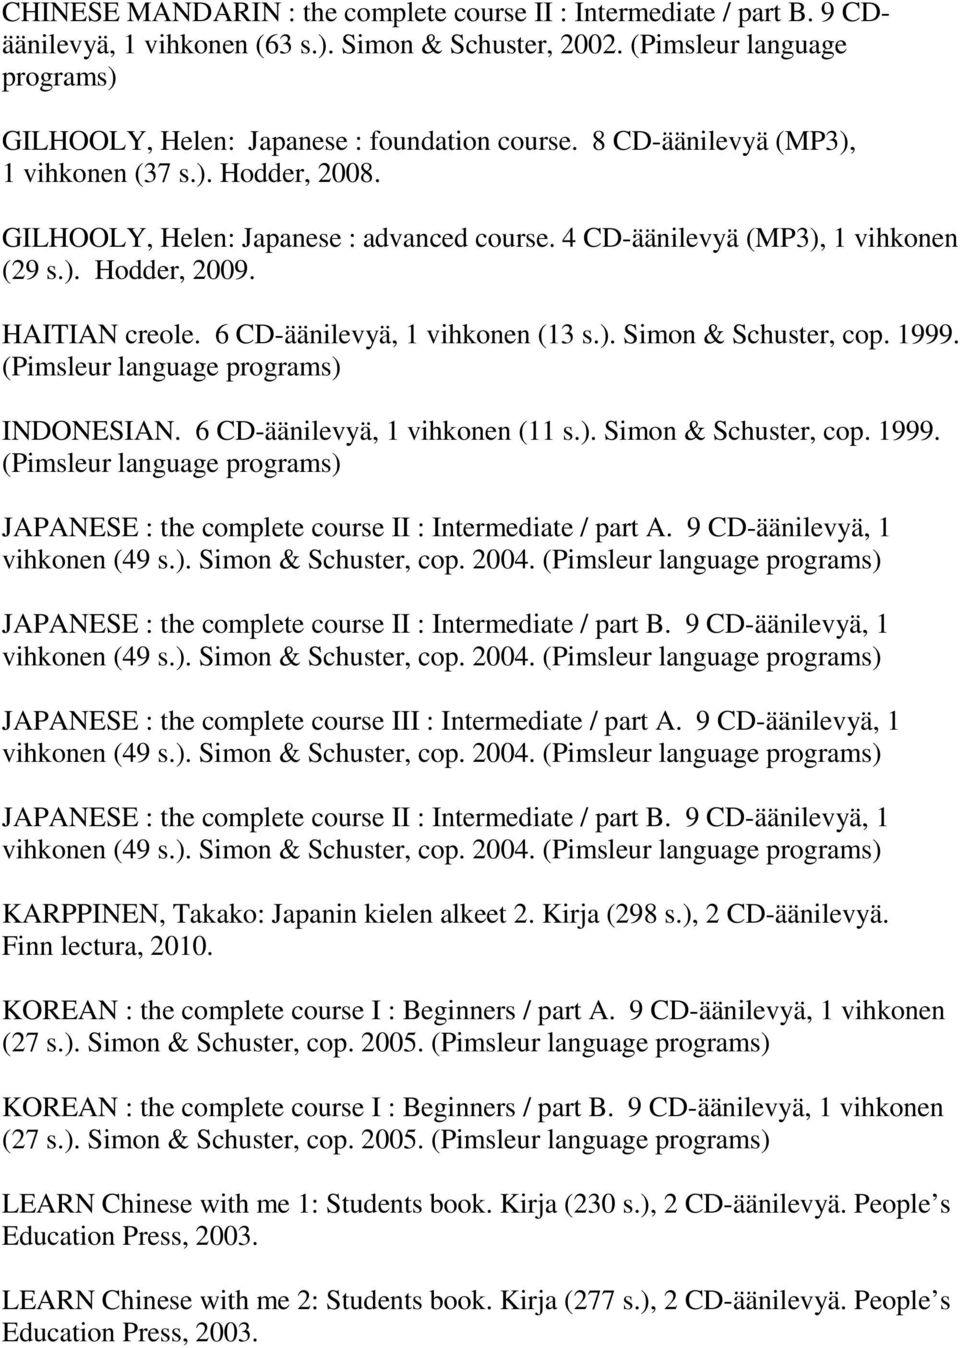 6 CD-äänilevyä, 1 vihkonen (11 s.). Simon & Schuster, cop. 1999. JAPANESE : the complete course II : Intermediate / part A. 9 CD-äänilevyä, 1 vihkonen (49 s.). Simon & Schuster, cop. 2004.